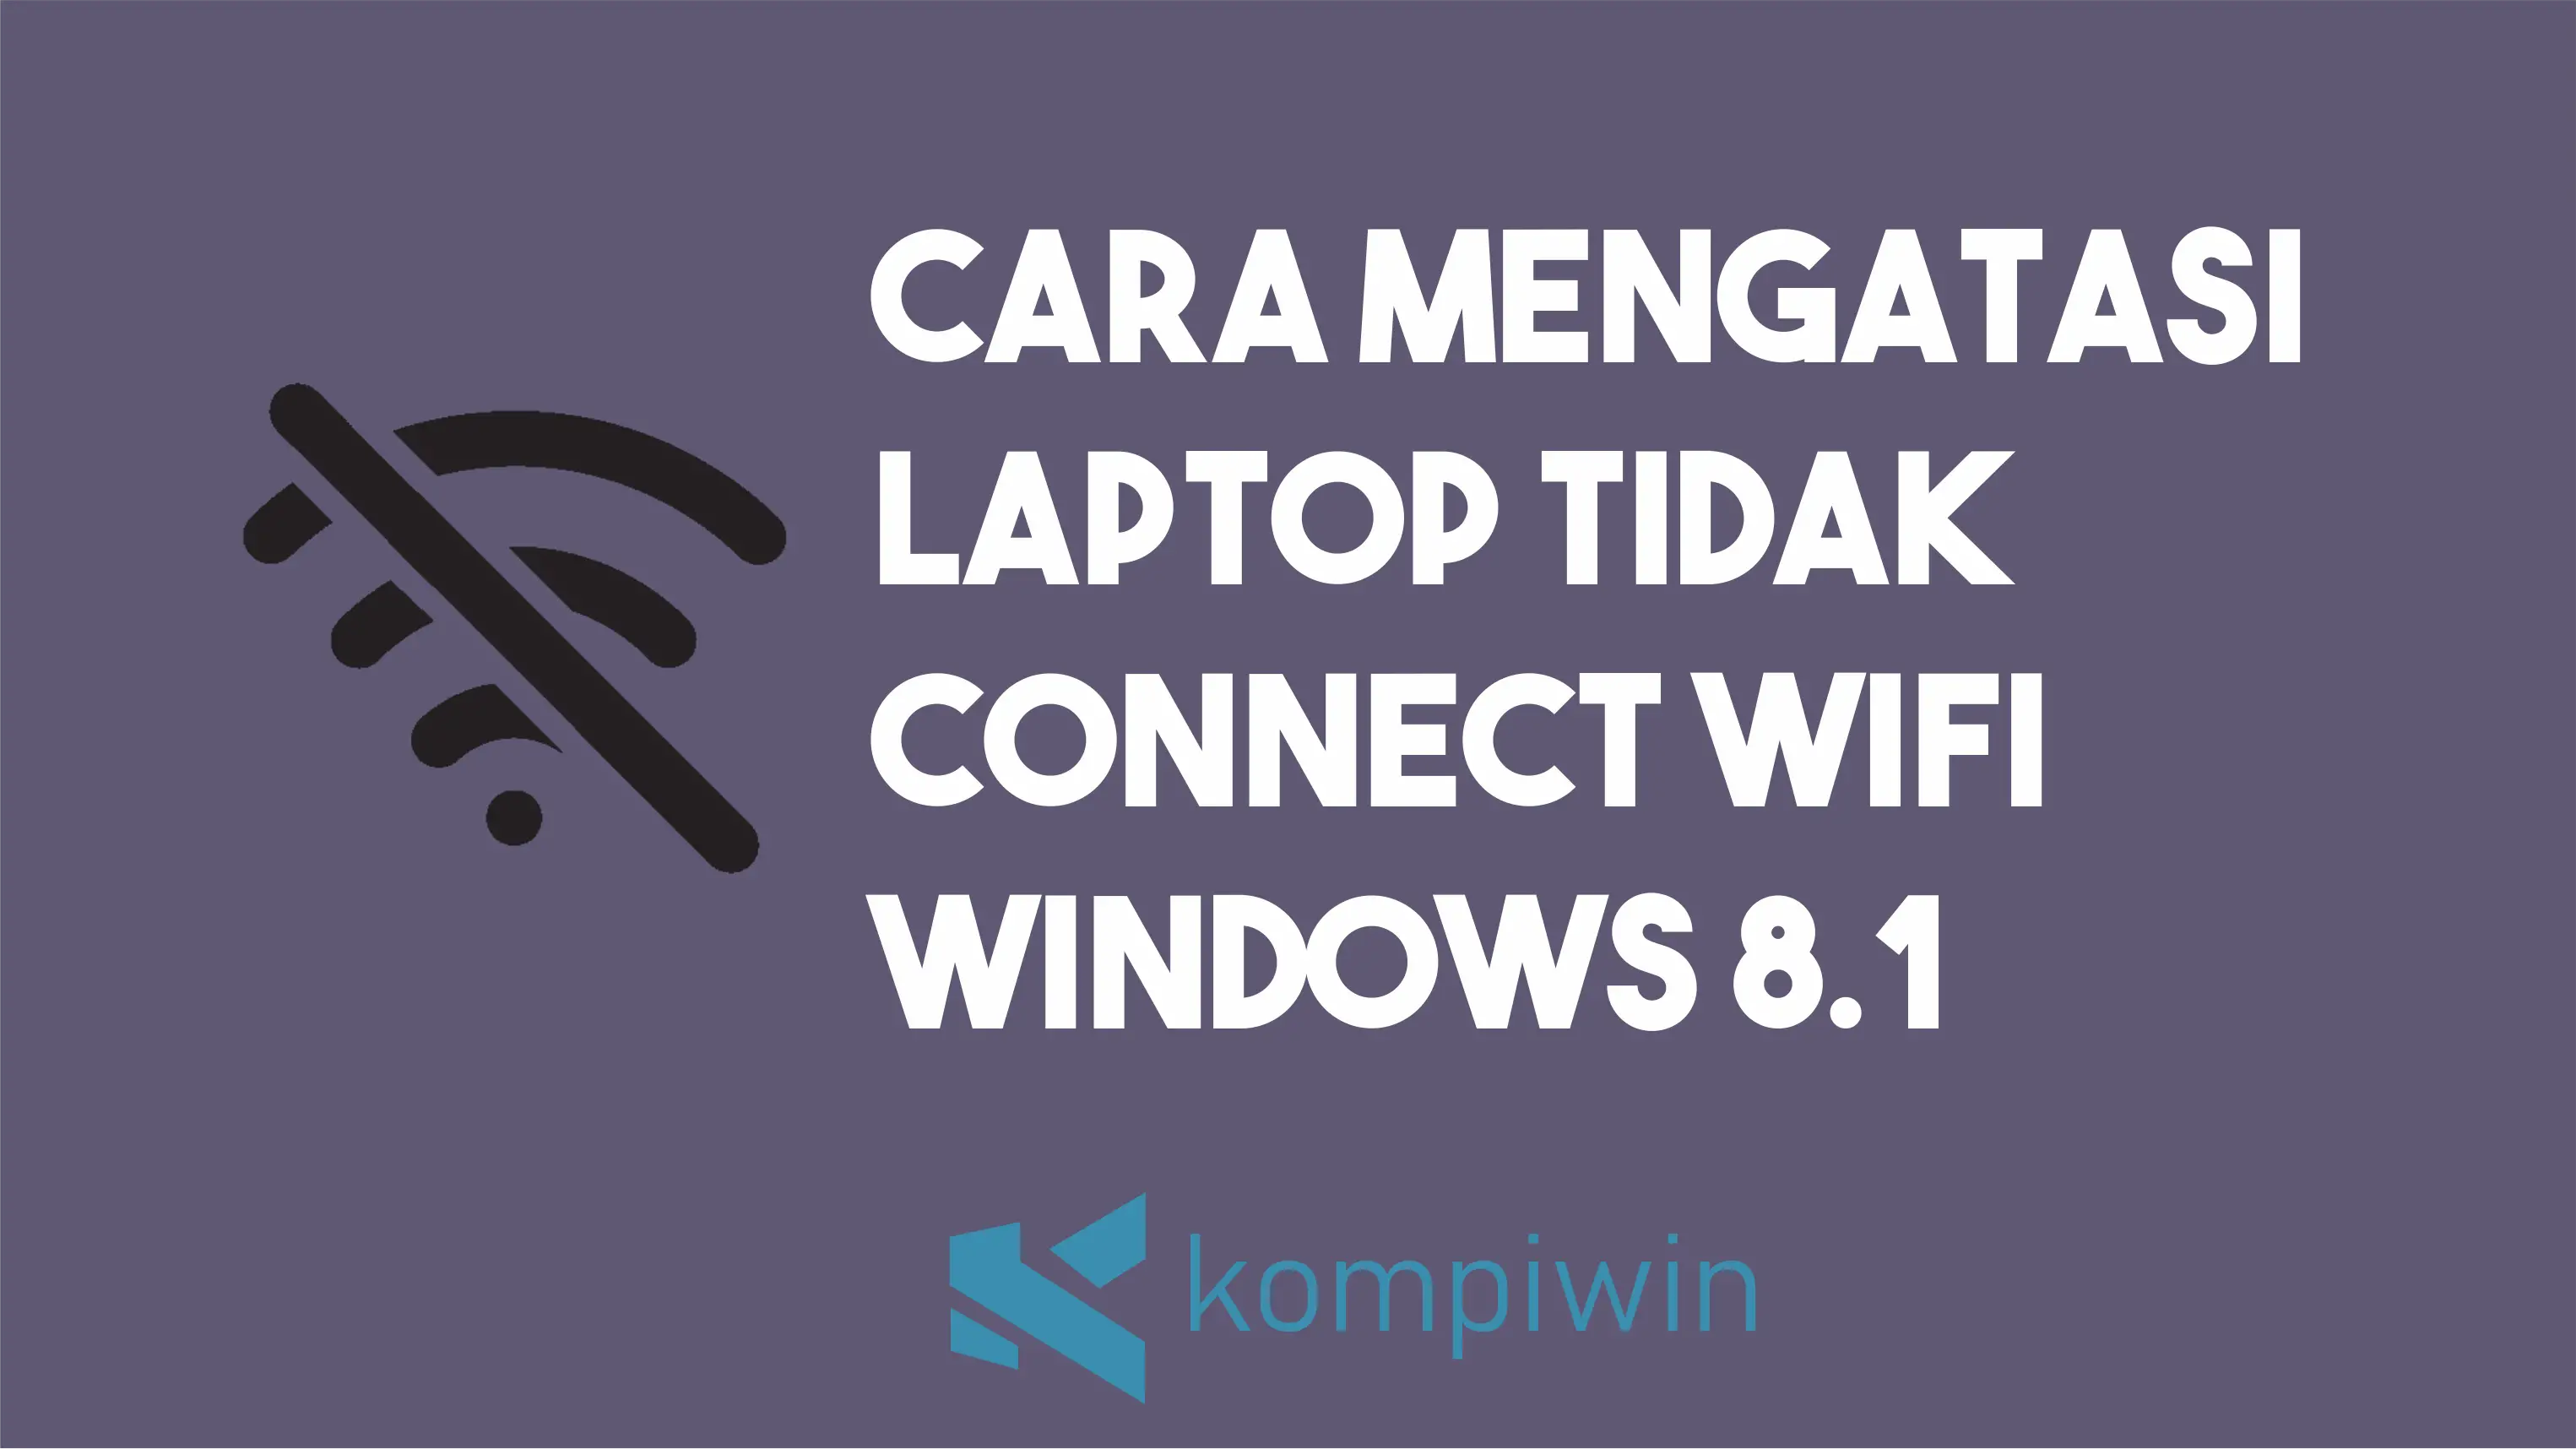 Cara Mengatasi Laptop Tidak Connect Wifi Windows 8.1